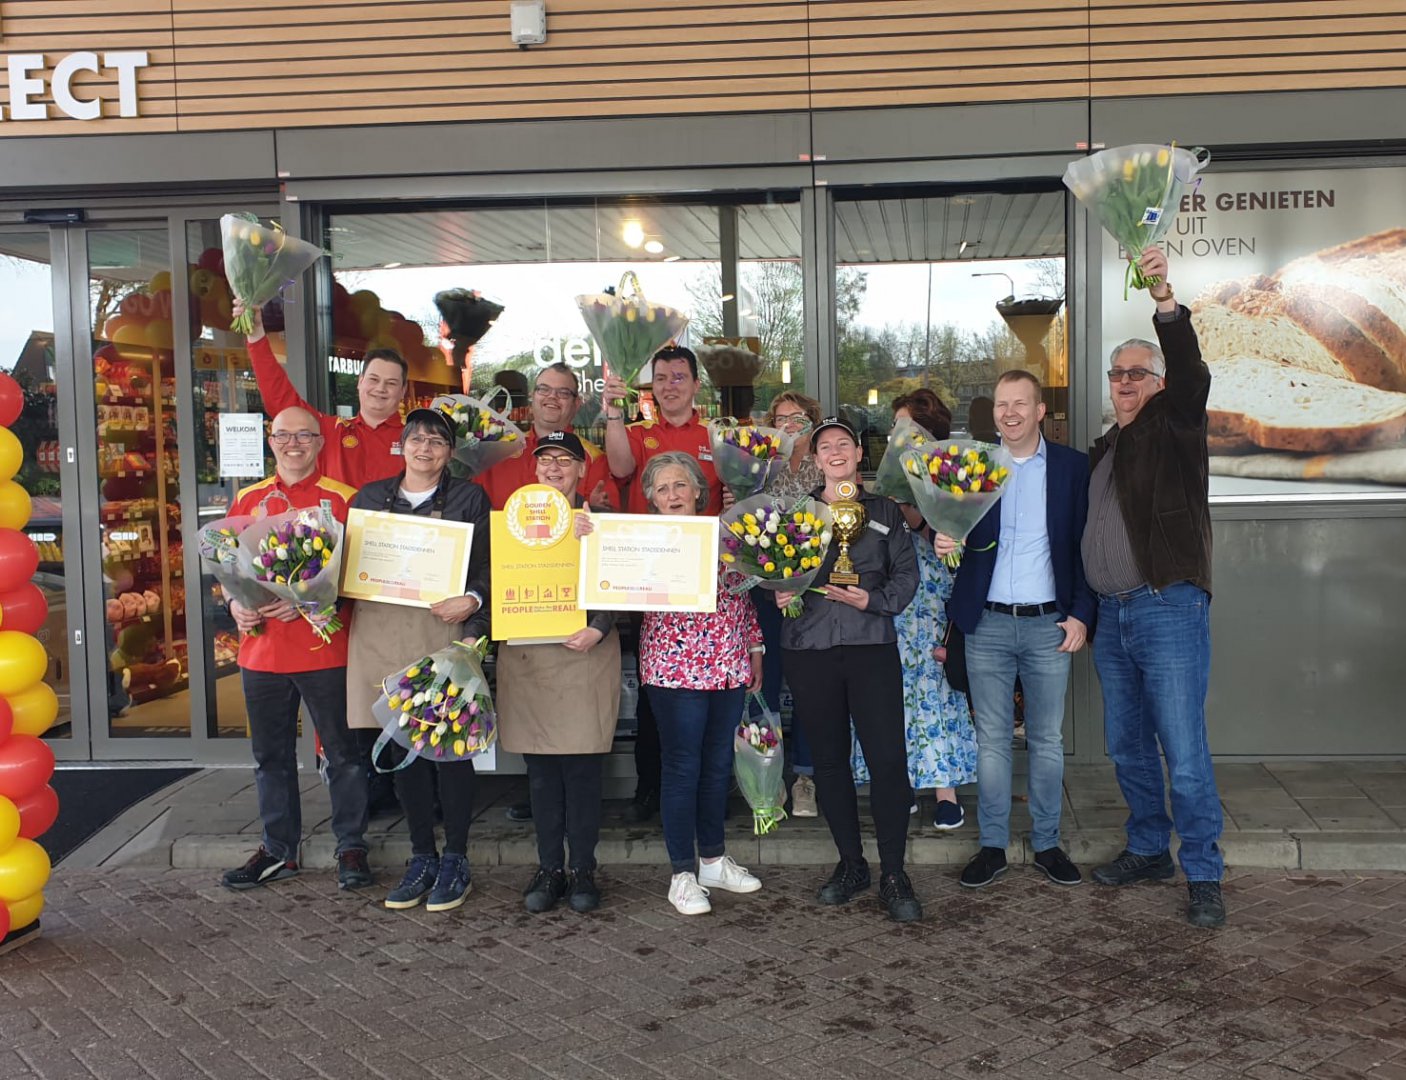 Shell Stadsdennen uitgeroepen tot beste Shell-station 2021 van Nederland